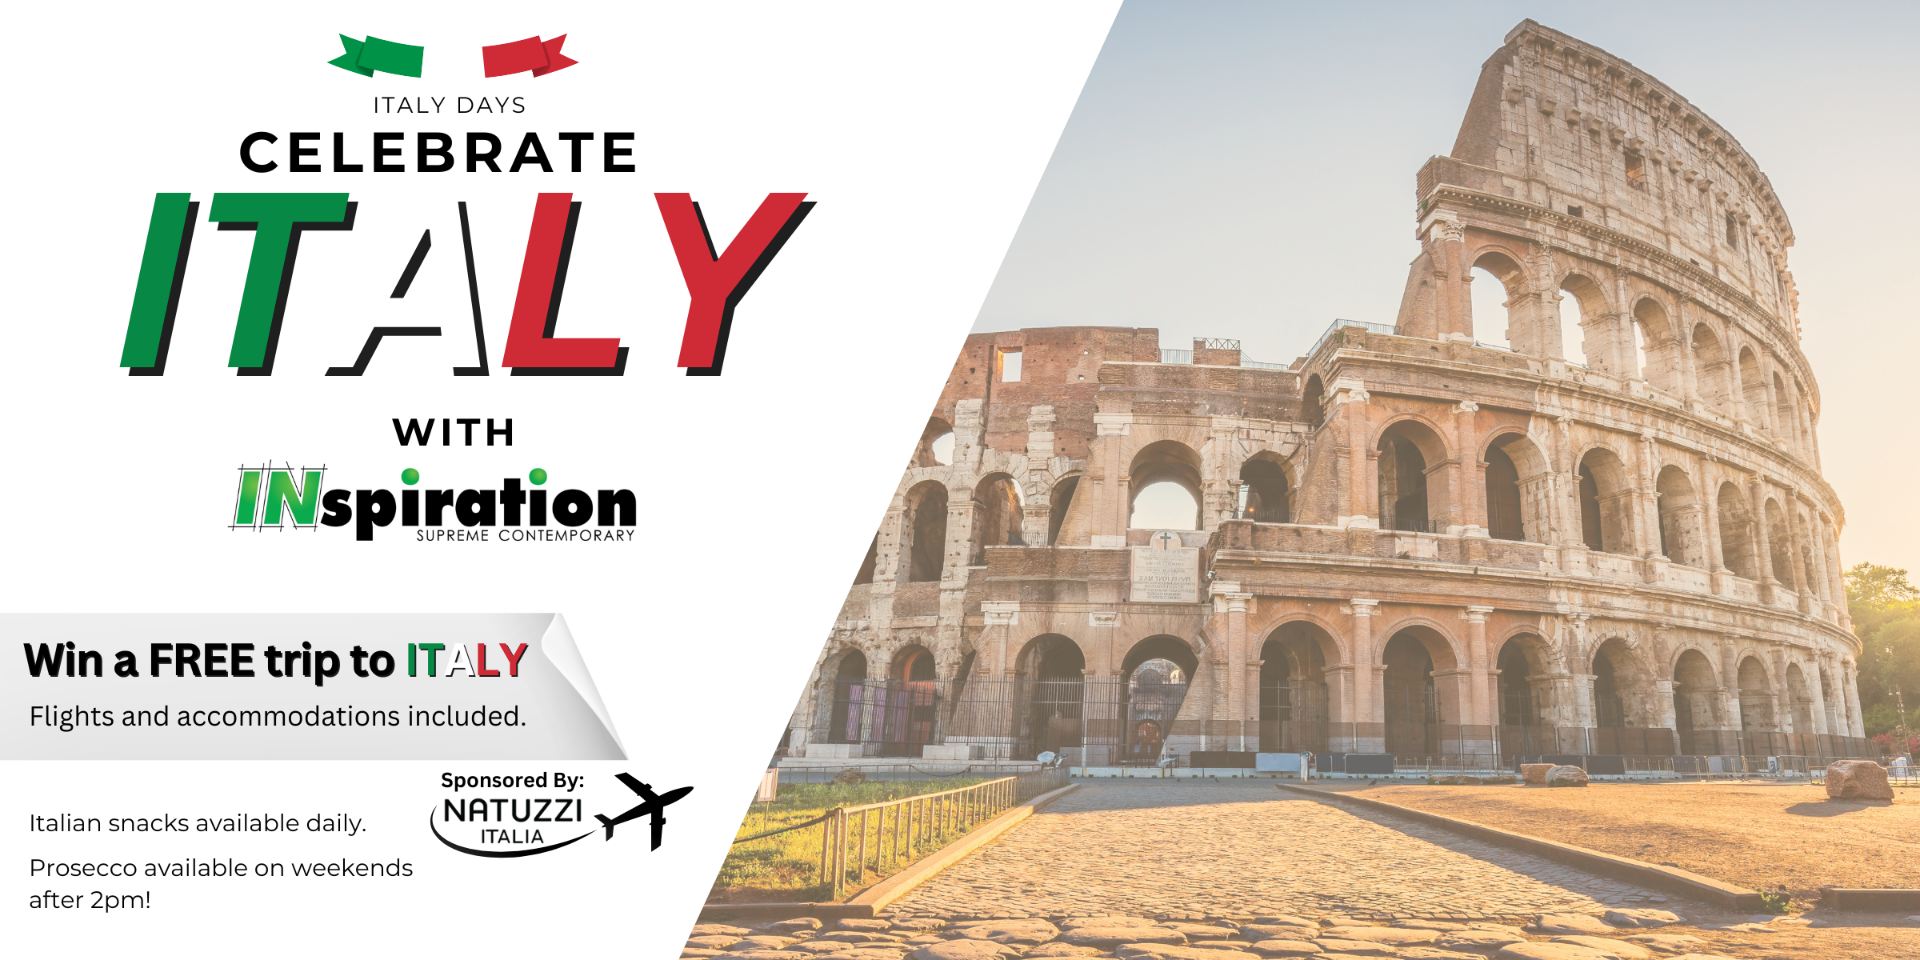 Italy Days Trip Contest